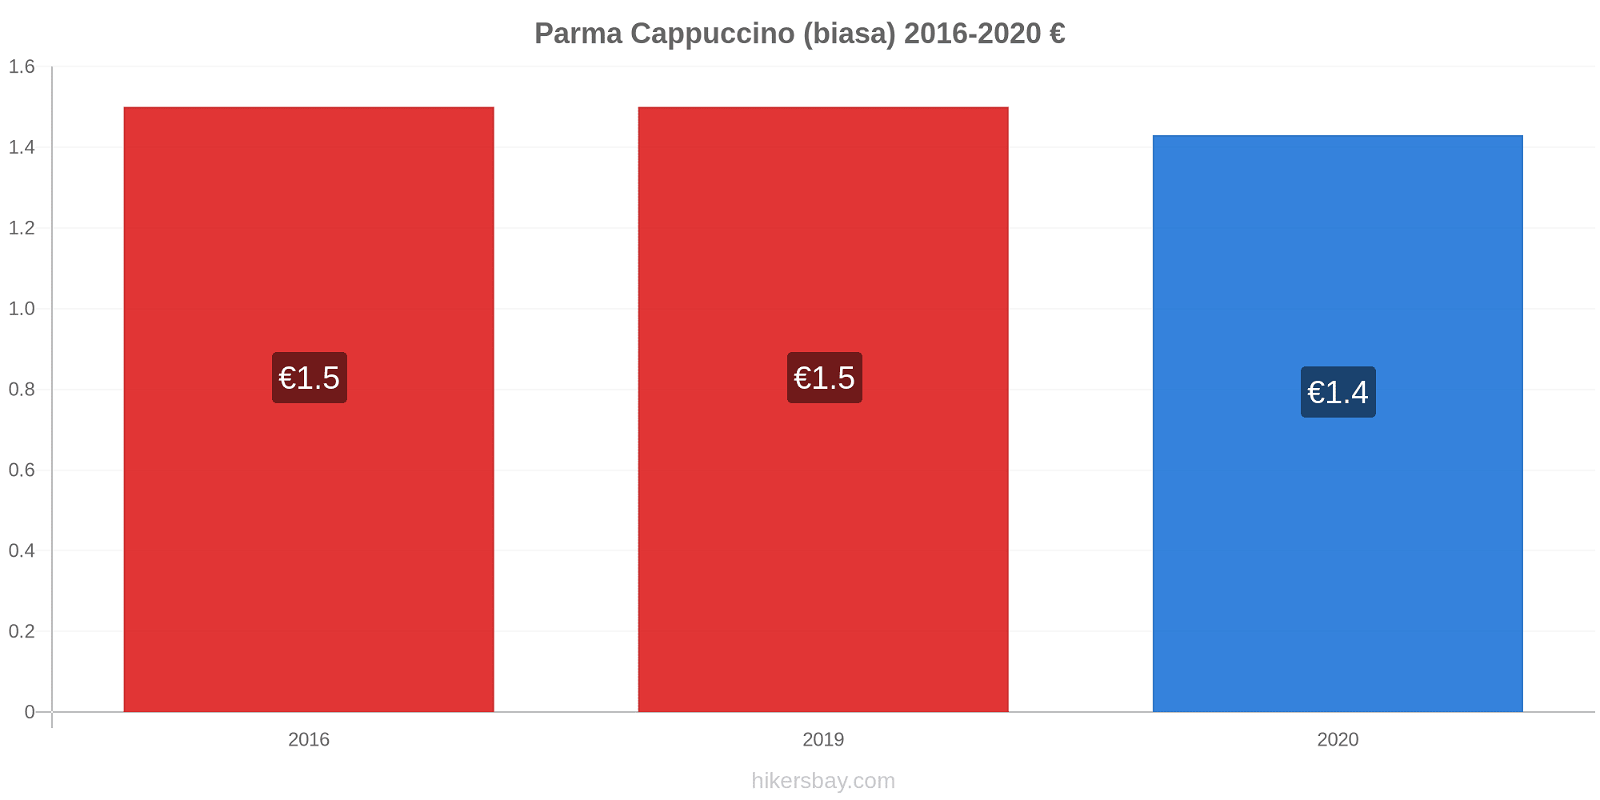 Parma perubahan harga Cappuccino (biasa) hikersbay.com